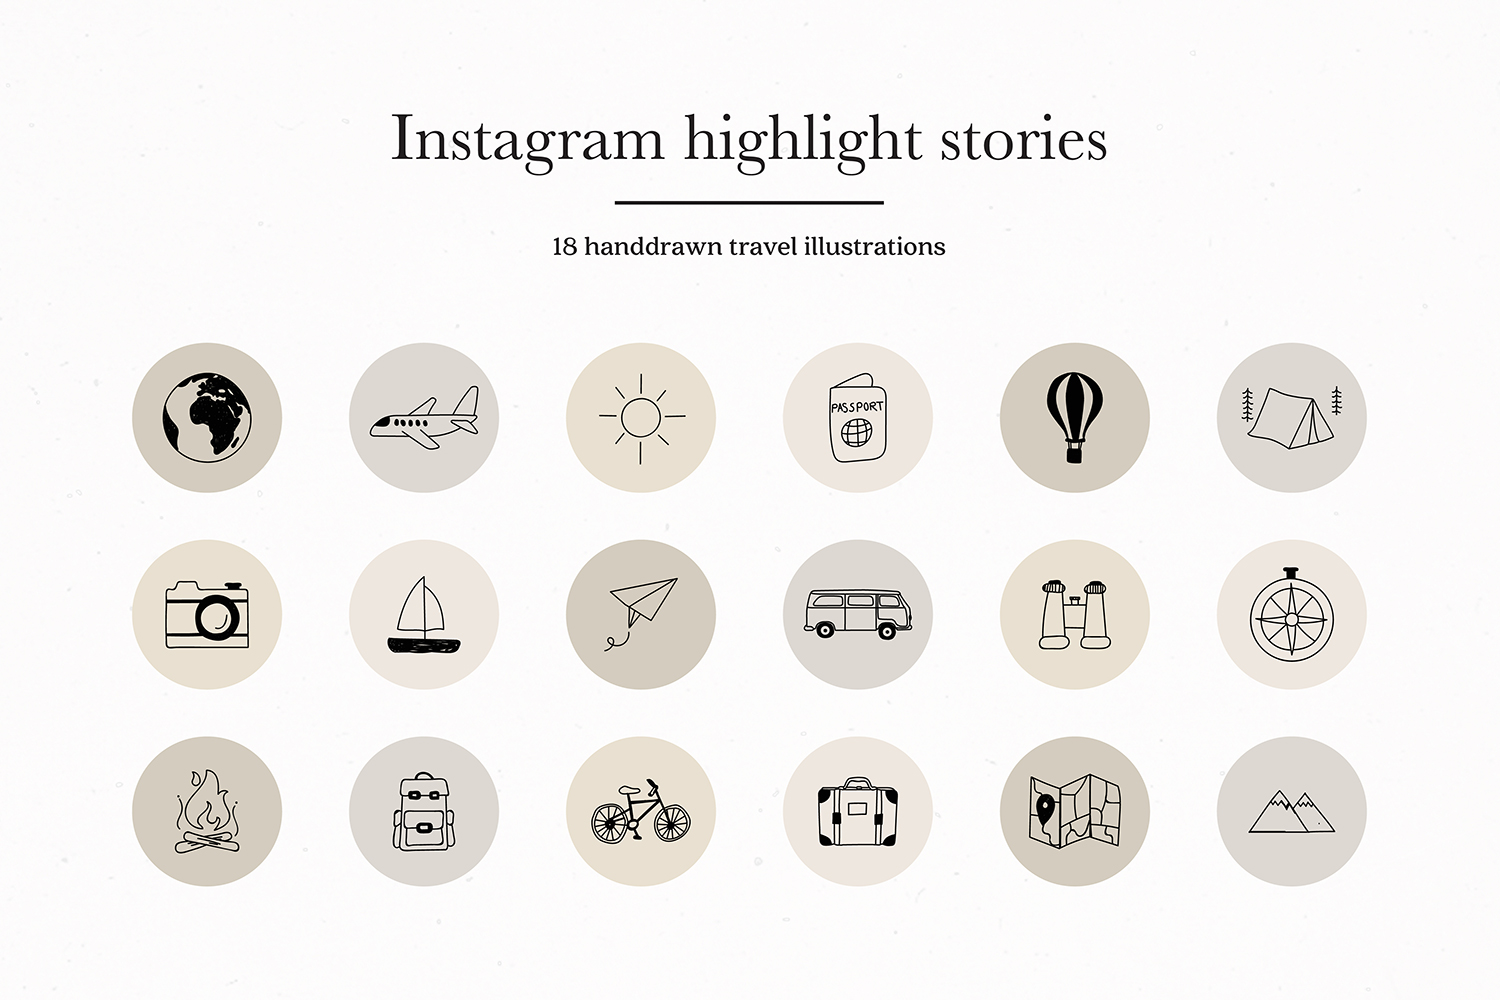 story highlight instagram viewer